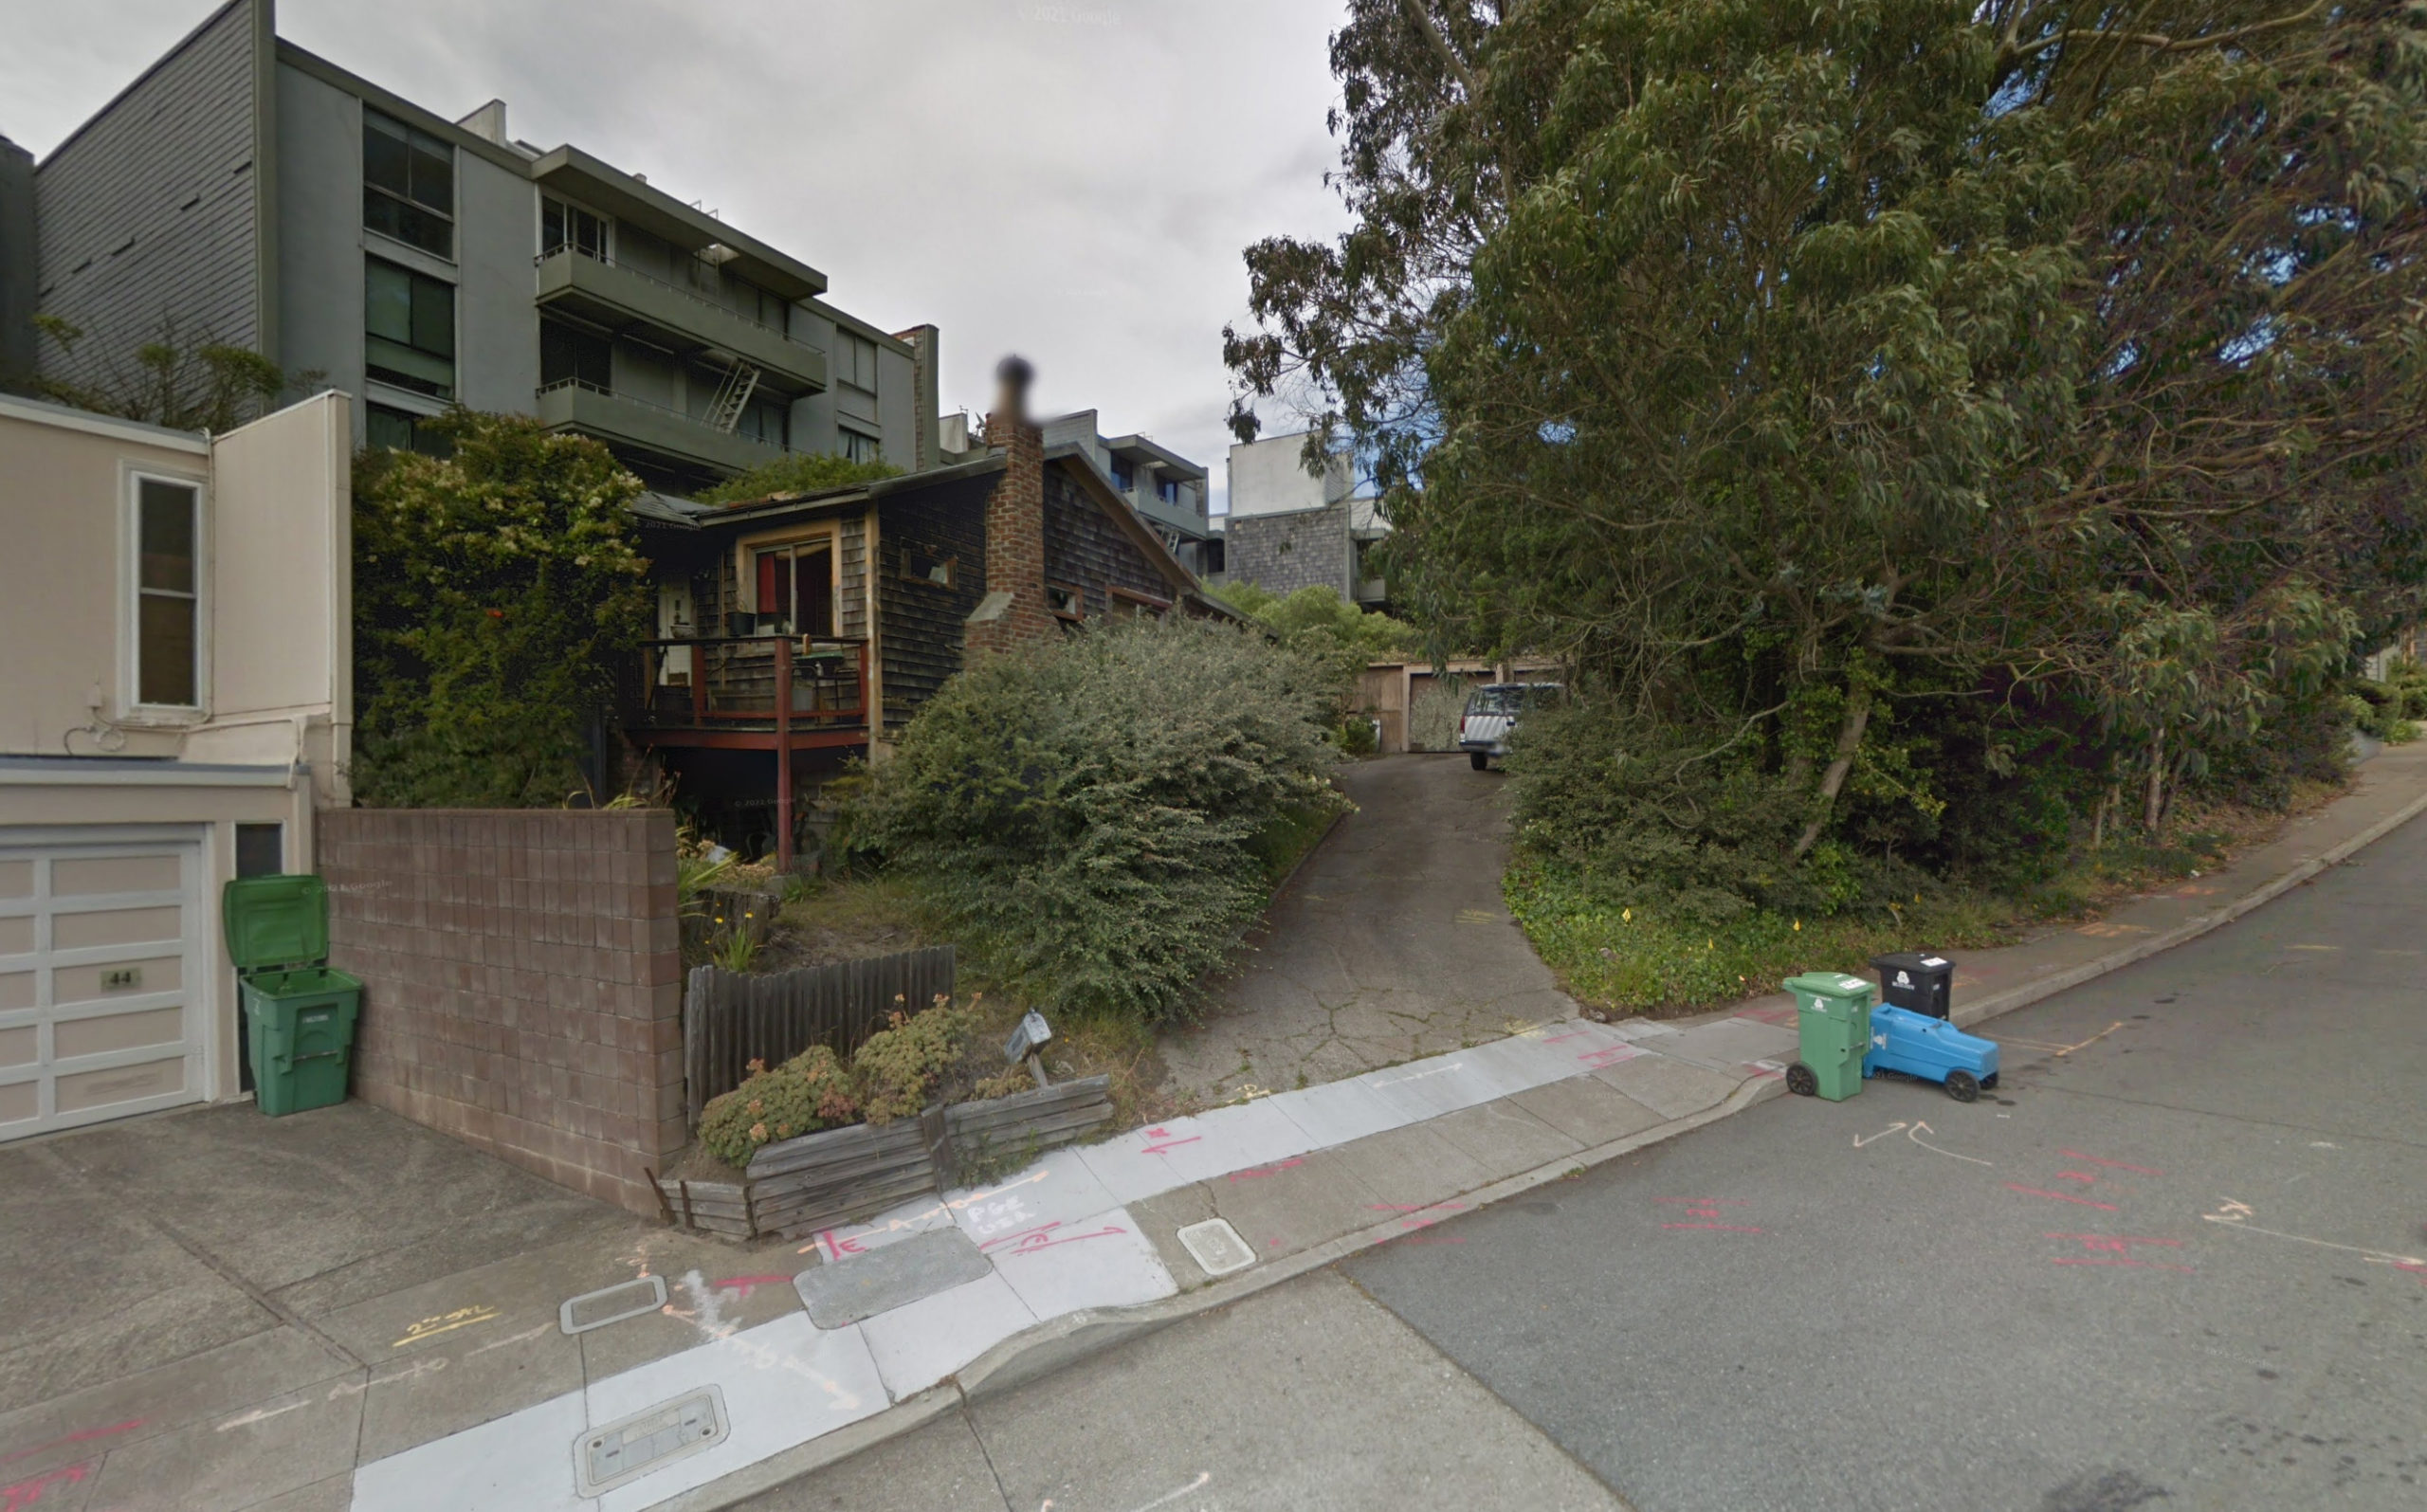 36 Amber Drive circa 2016, image via Google Street View